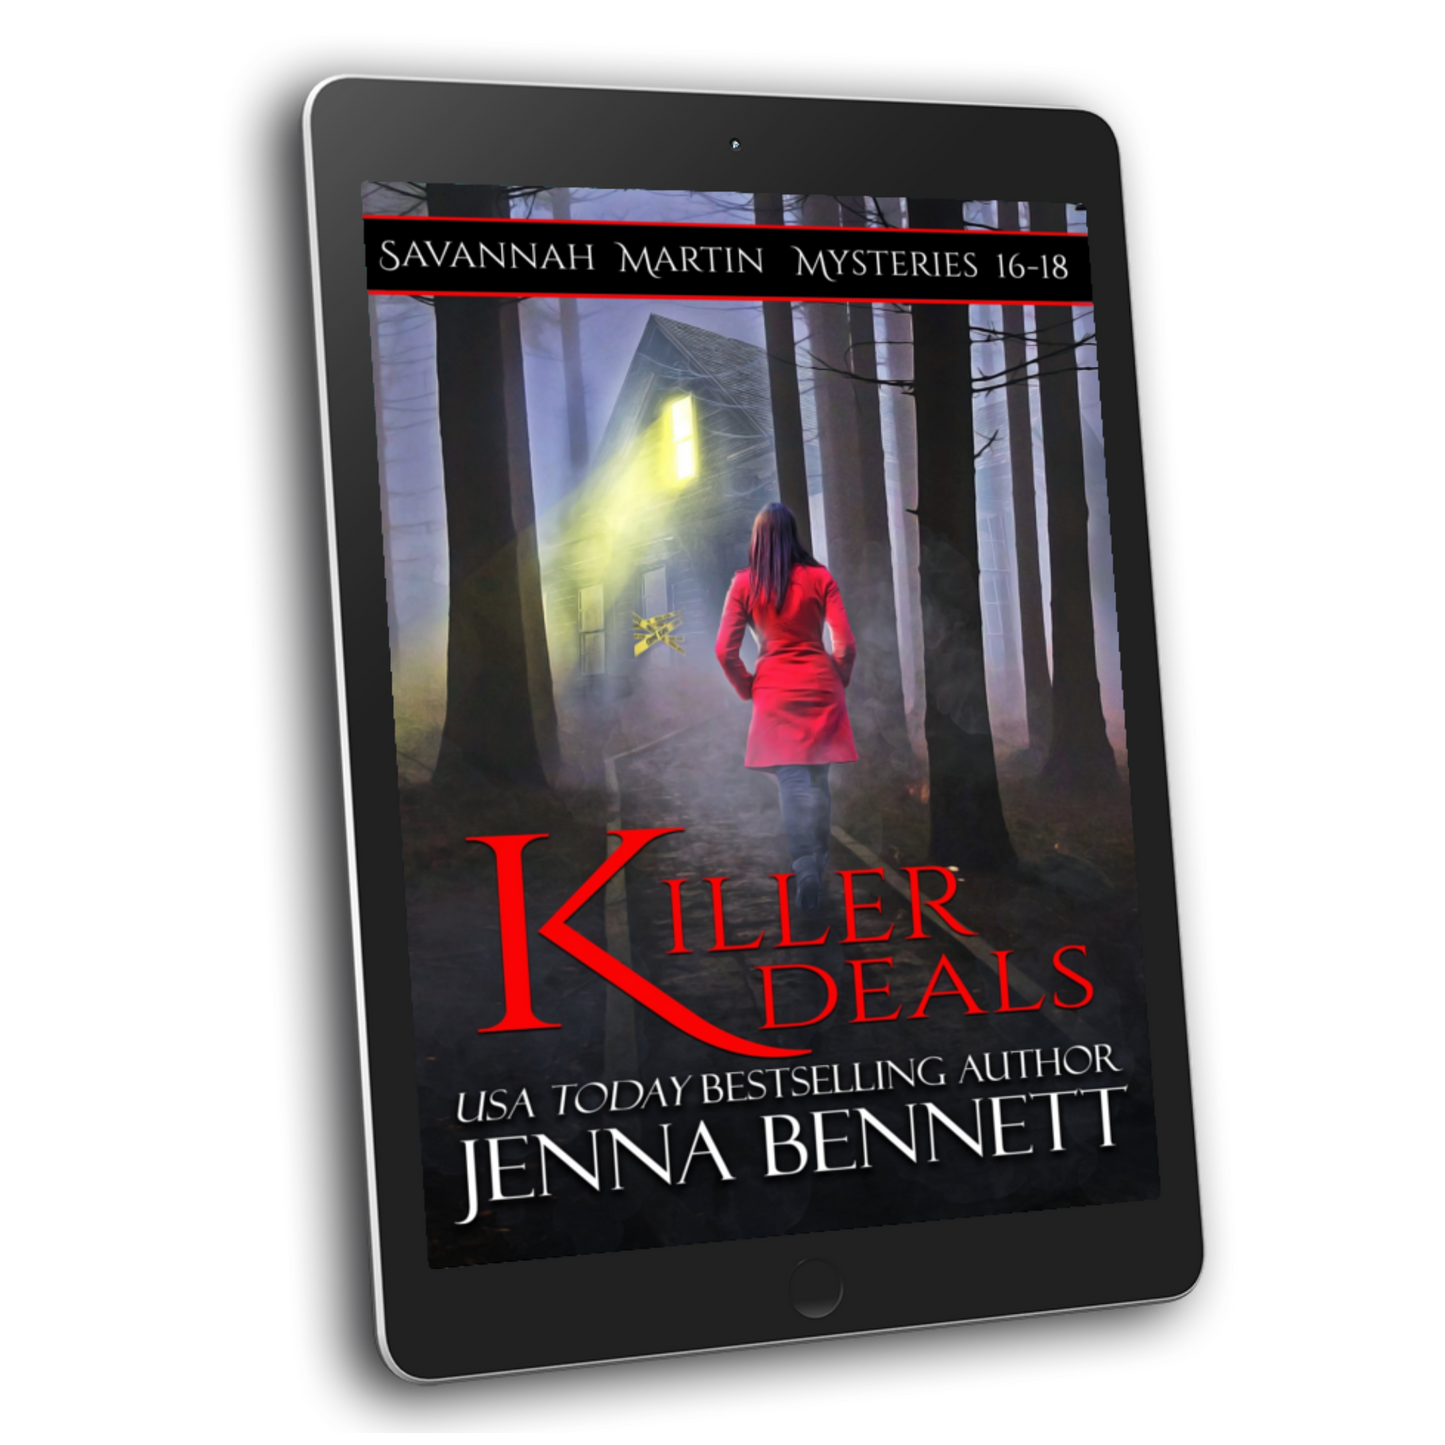 Killer Deals - Savannah Martin Mysteries 16-18